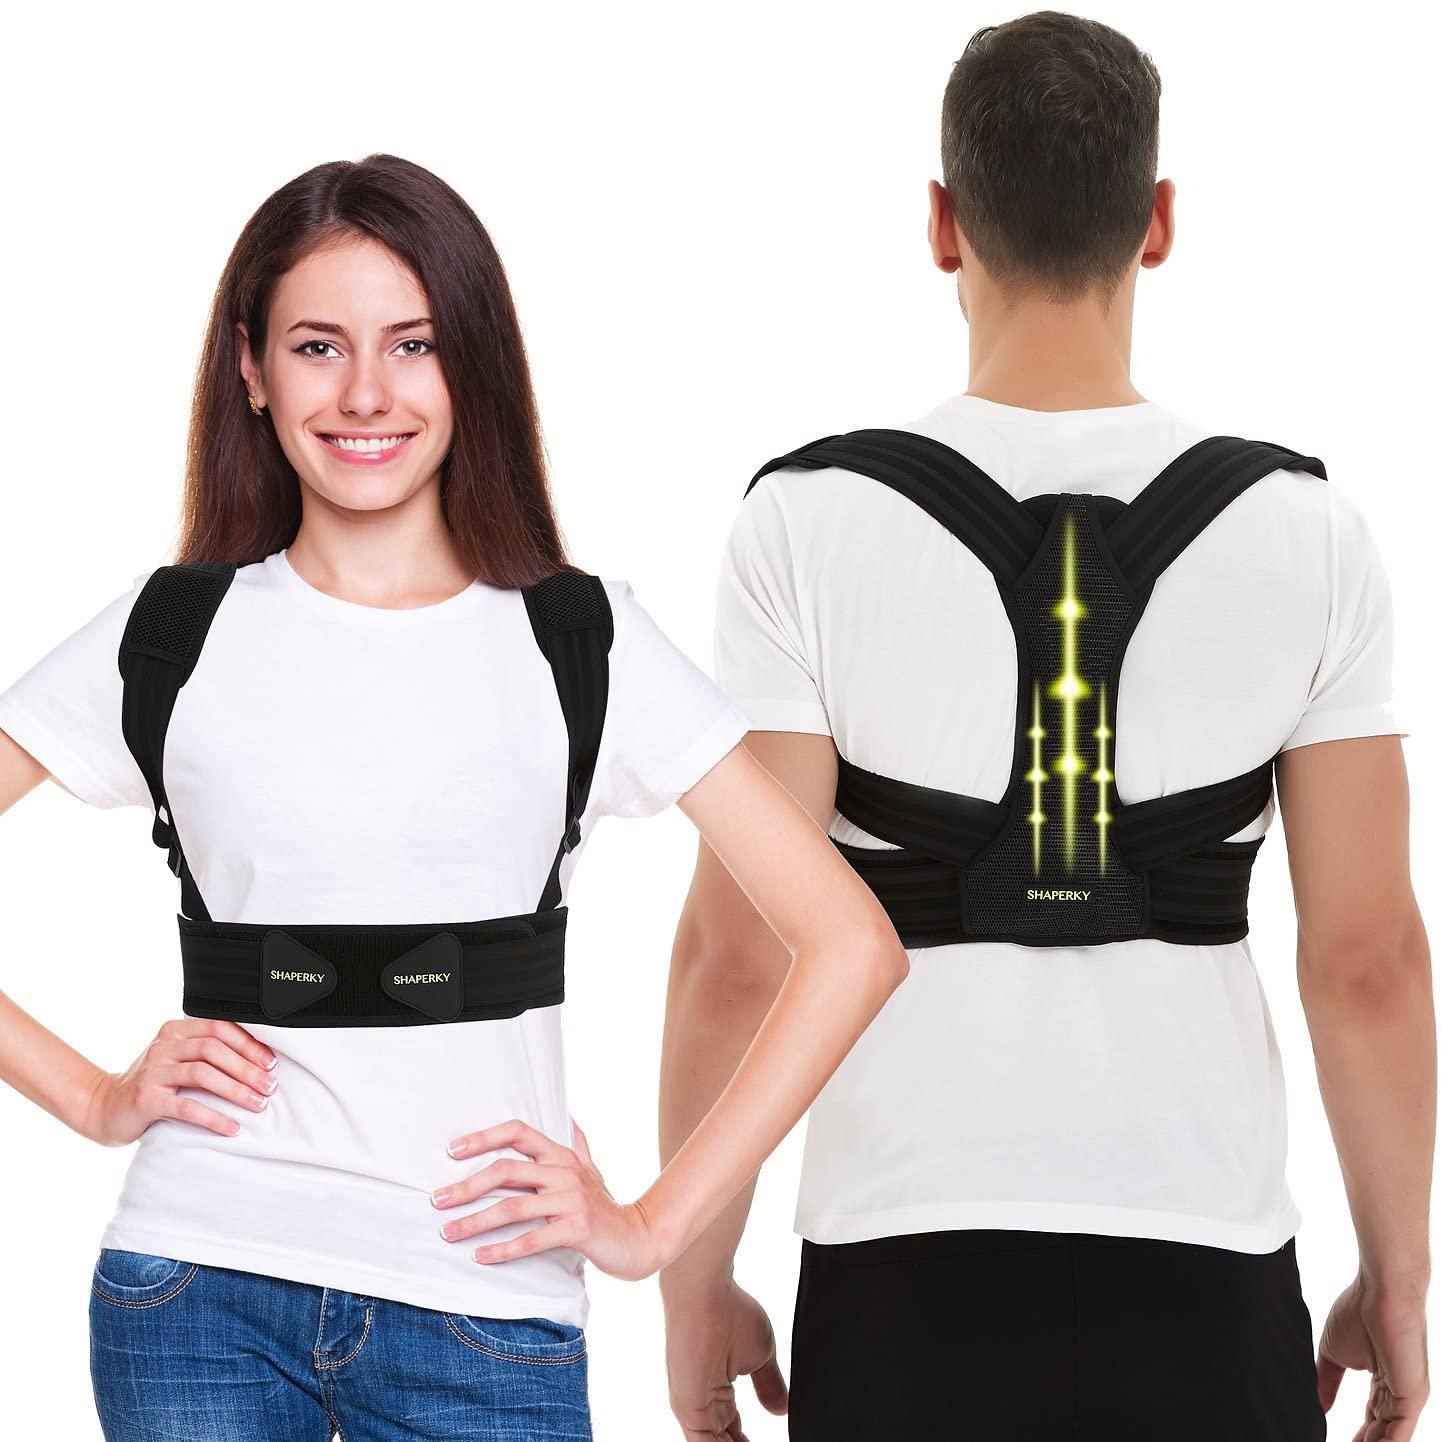 SHAPERKY Posture Corrector for Women and Men, Adjustable Upper